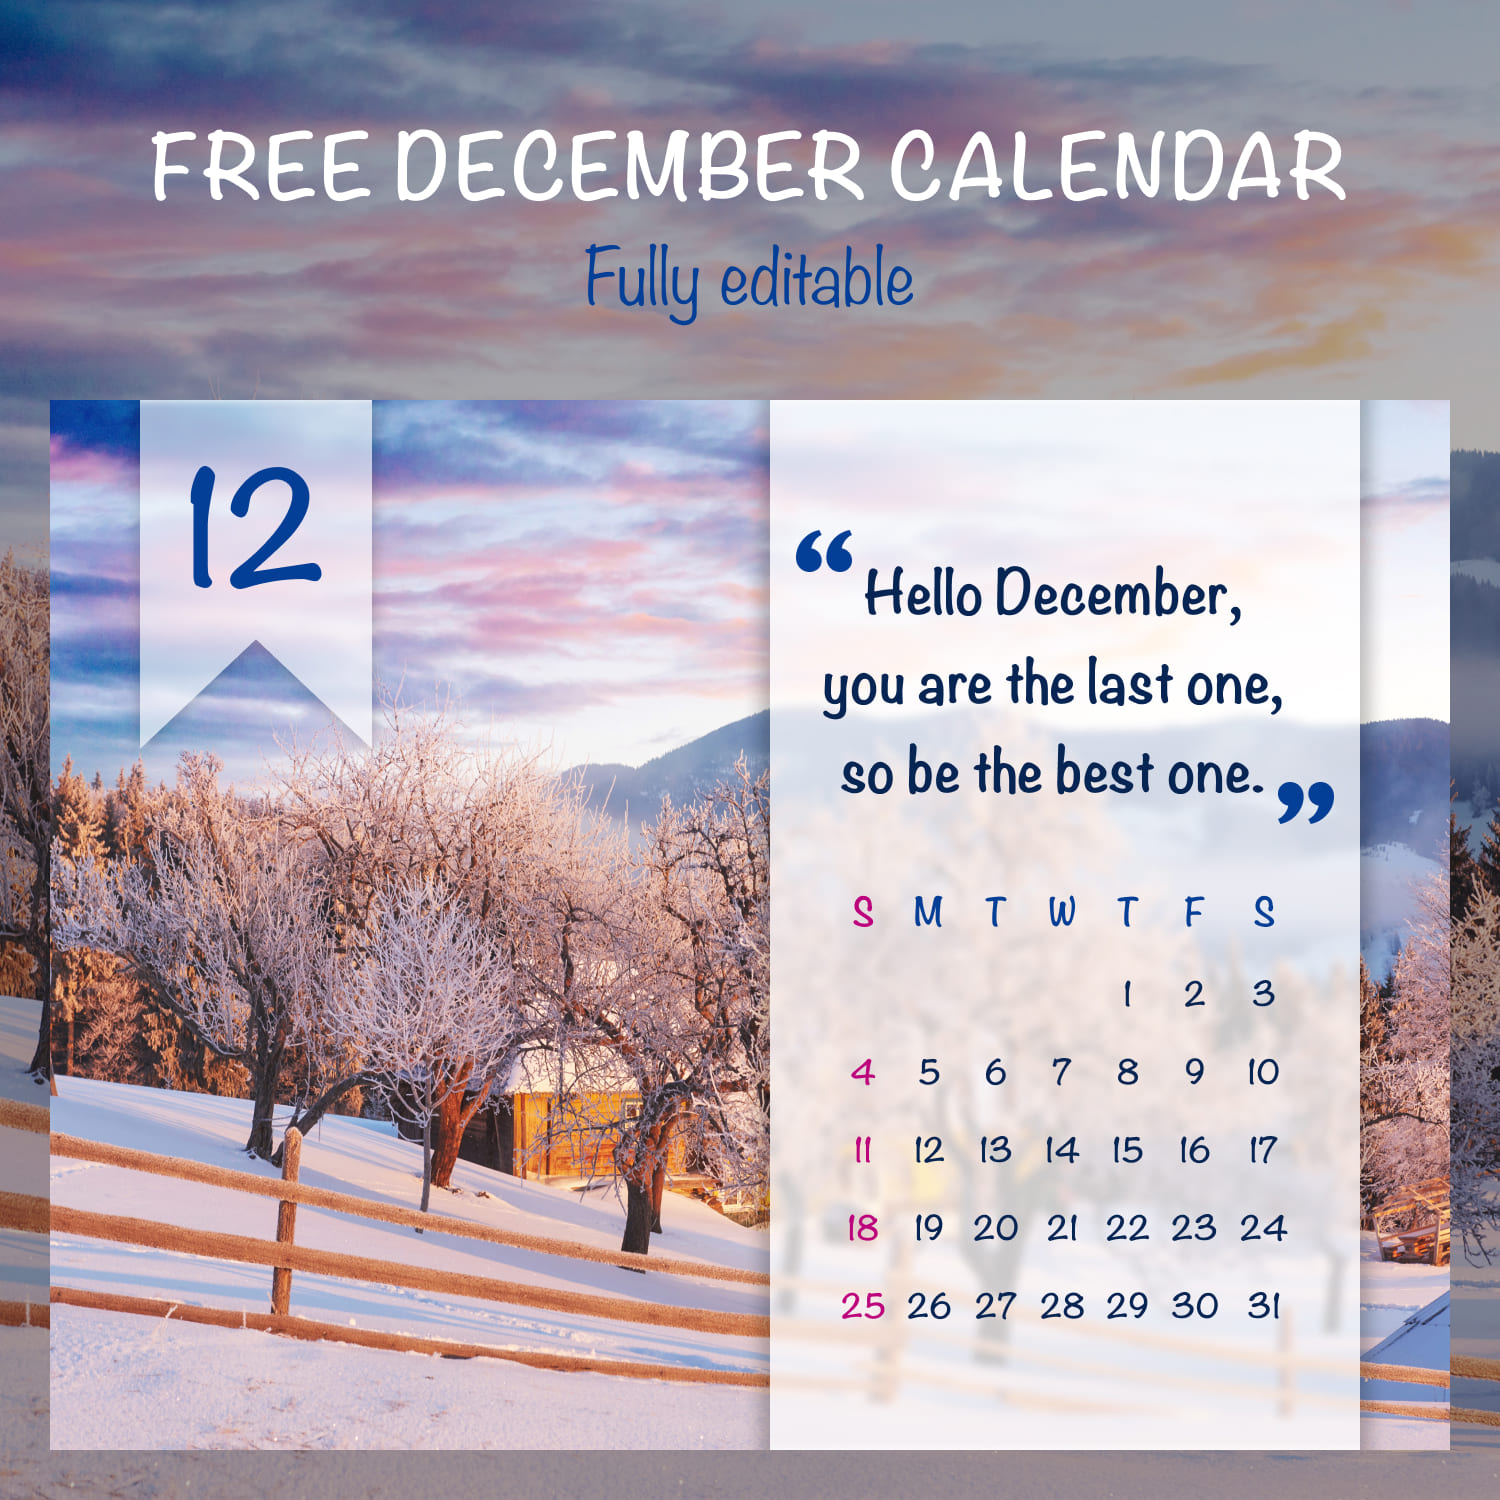 Hello December Free Calendar.